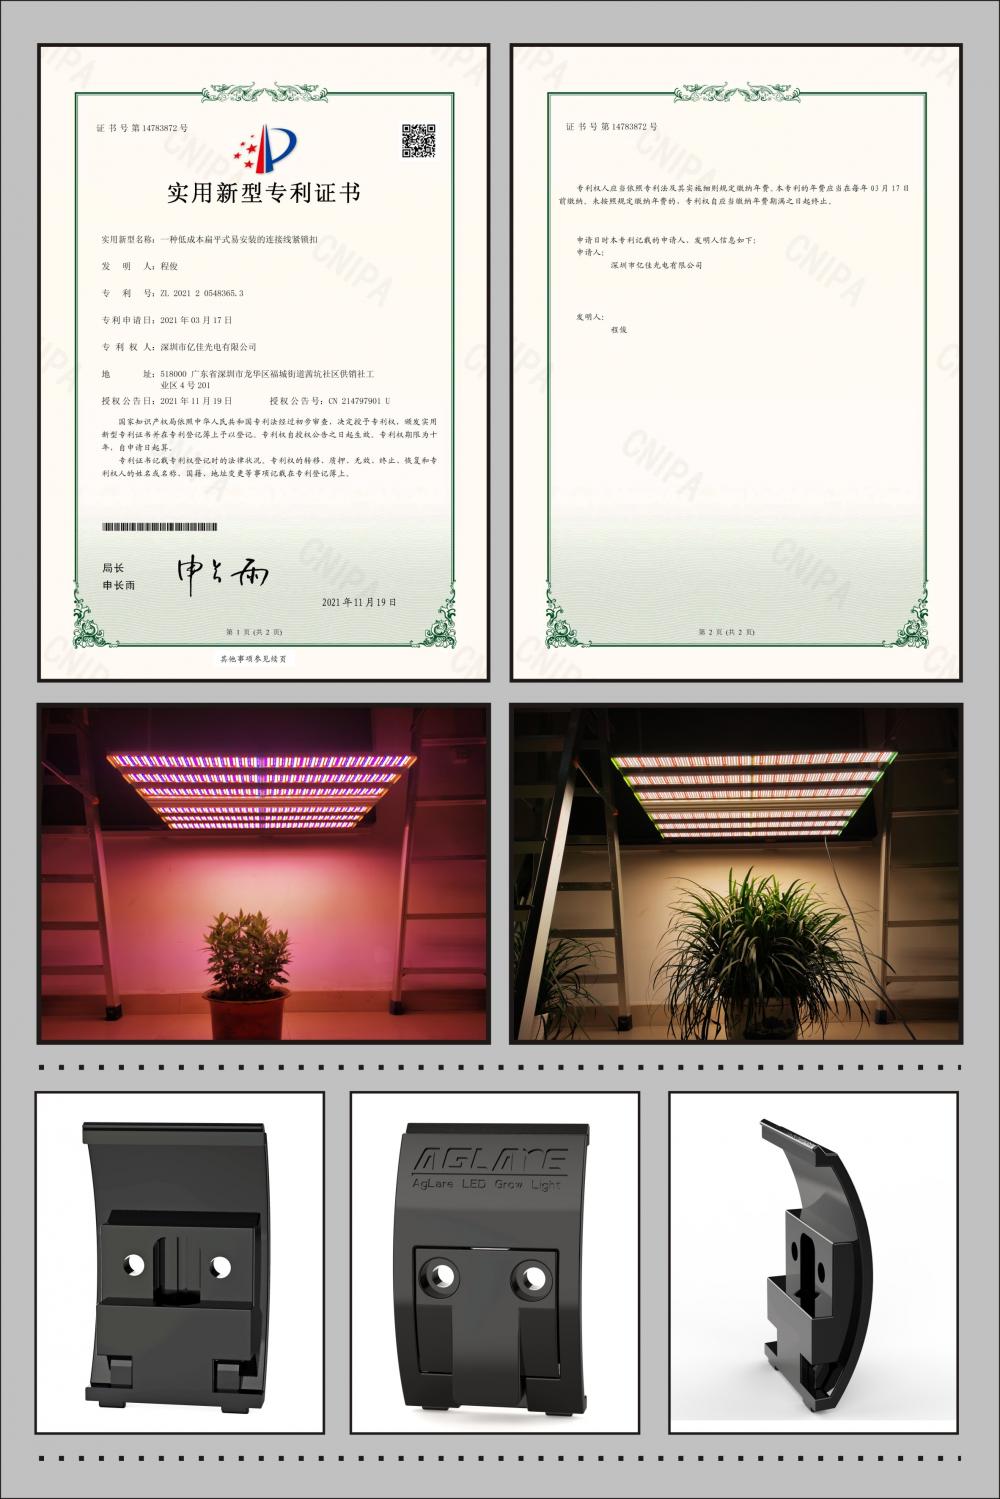 Plant growth lamp plastic accessories utility model patent